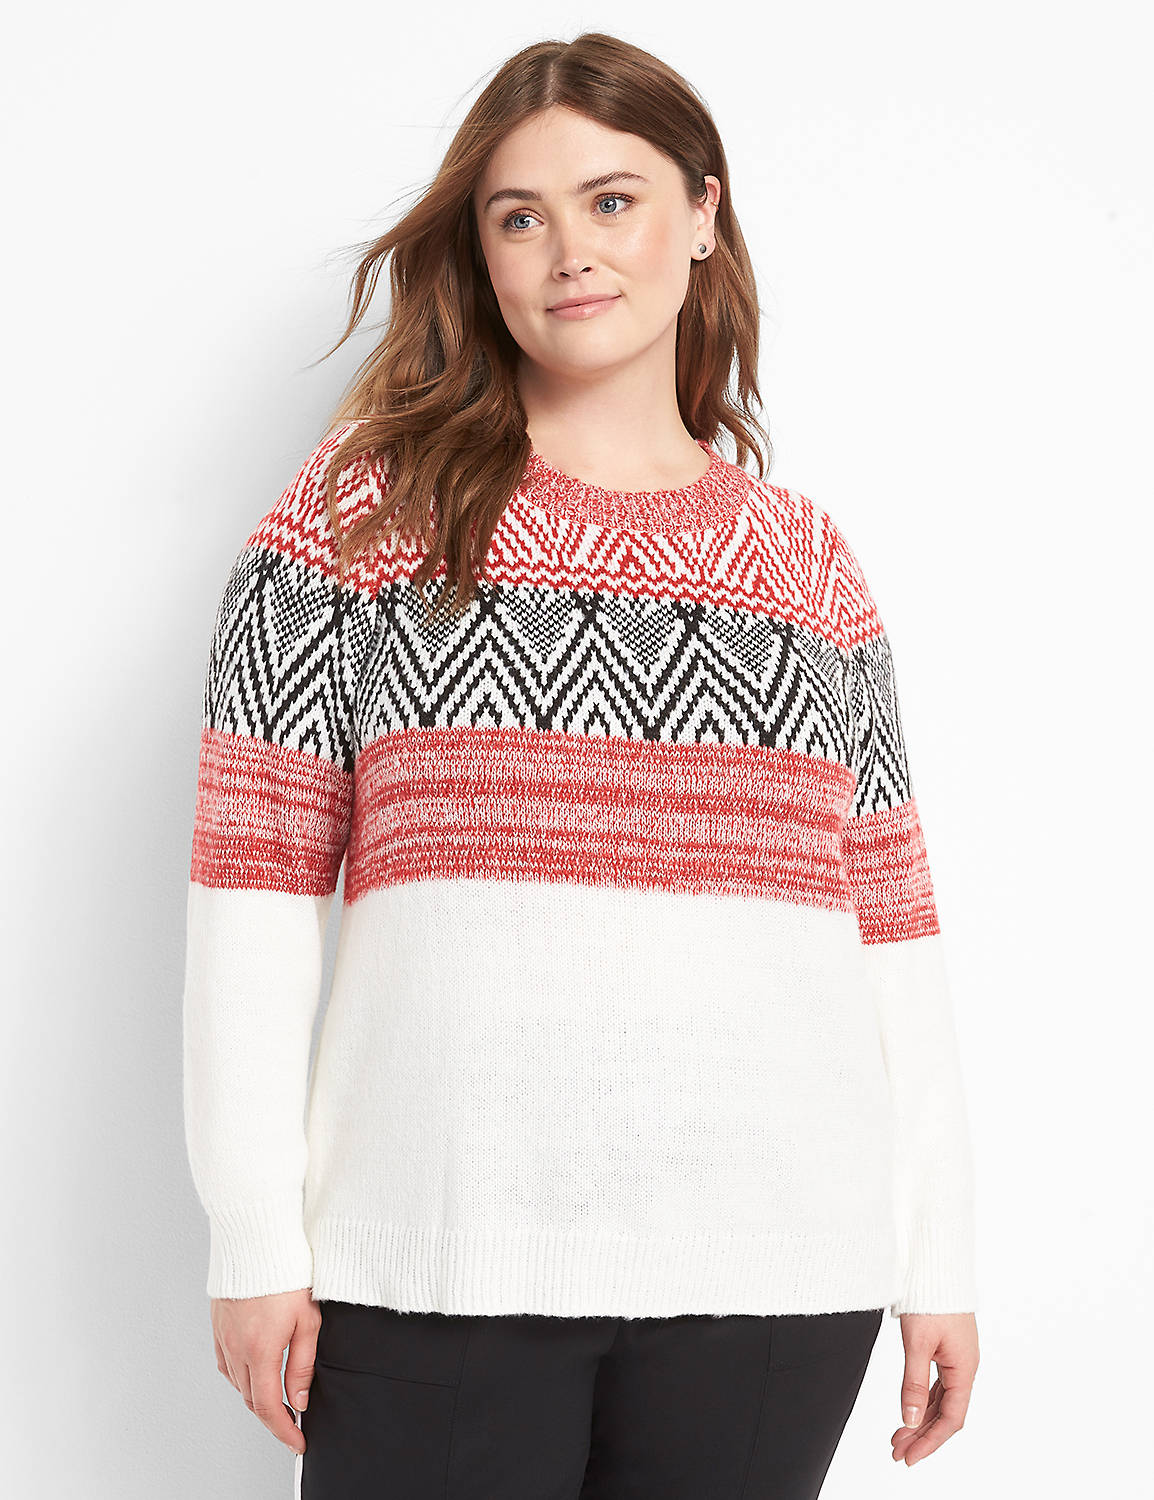 Crew-Neck Jacquard Sweater Product Image 1